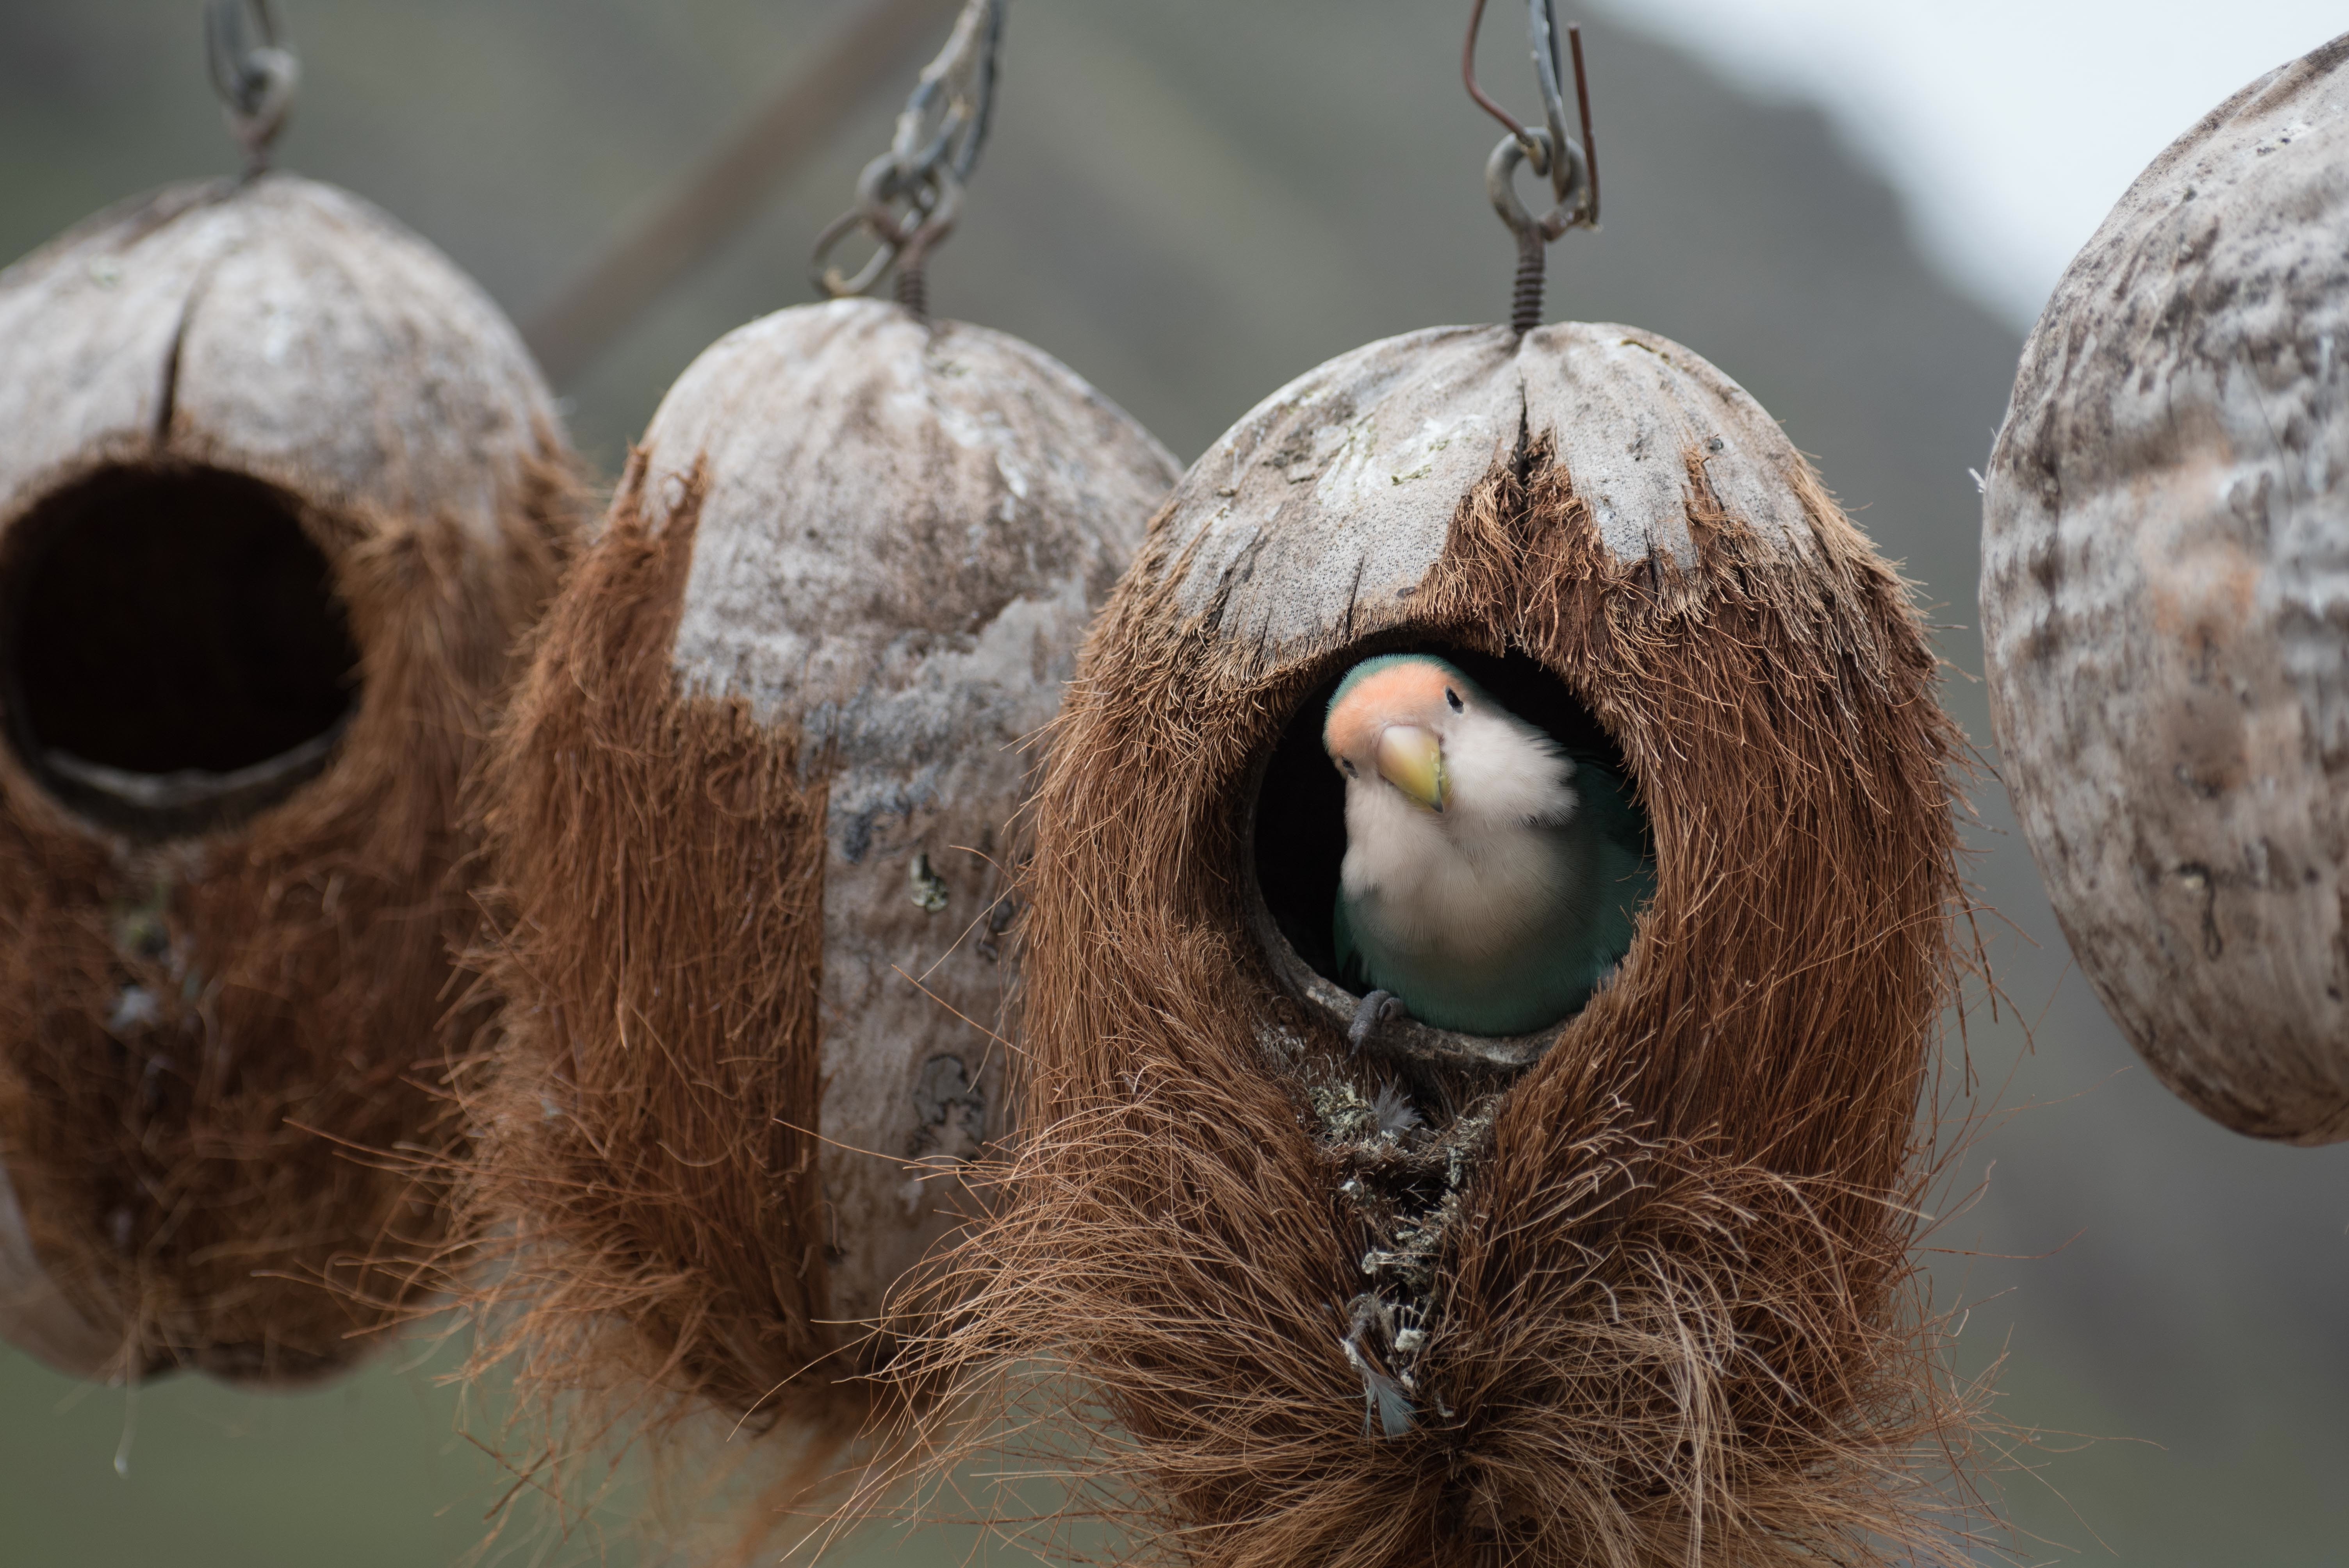 bird on coconut shell hanged